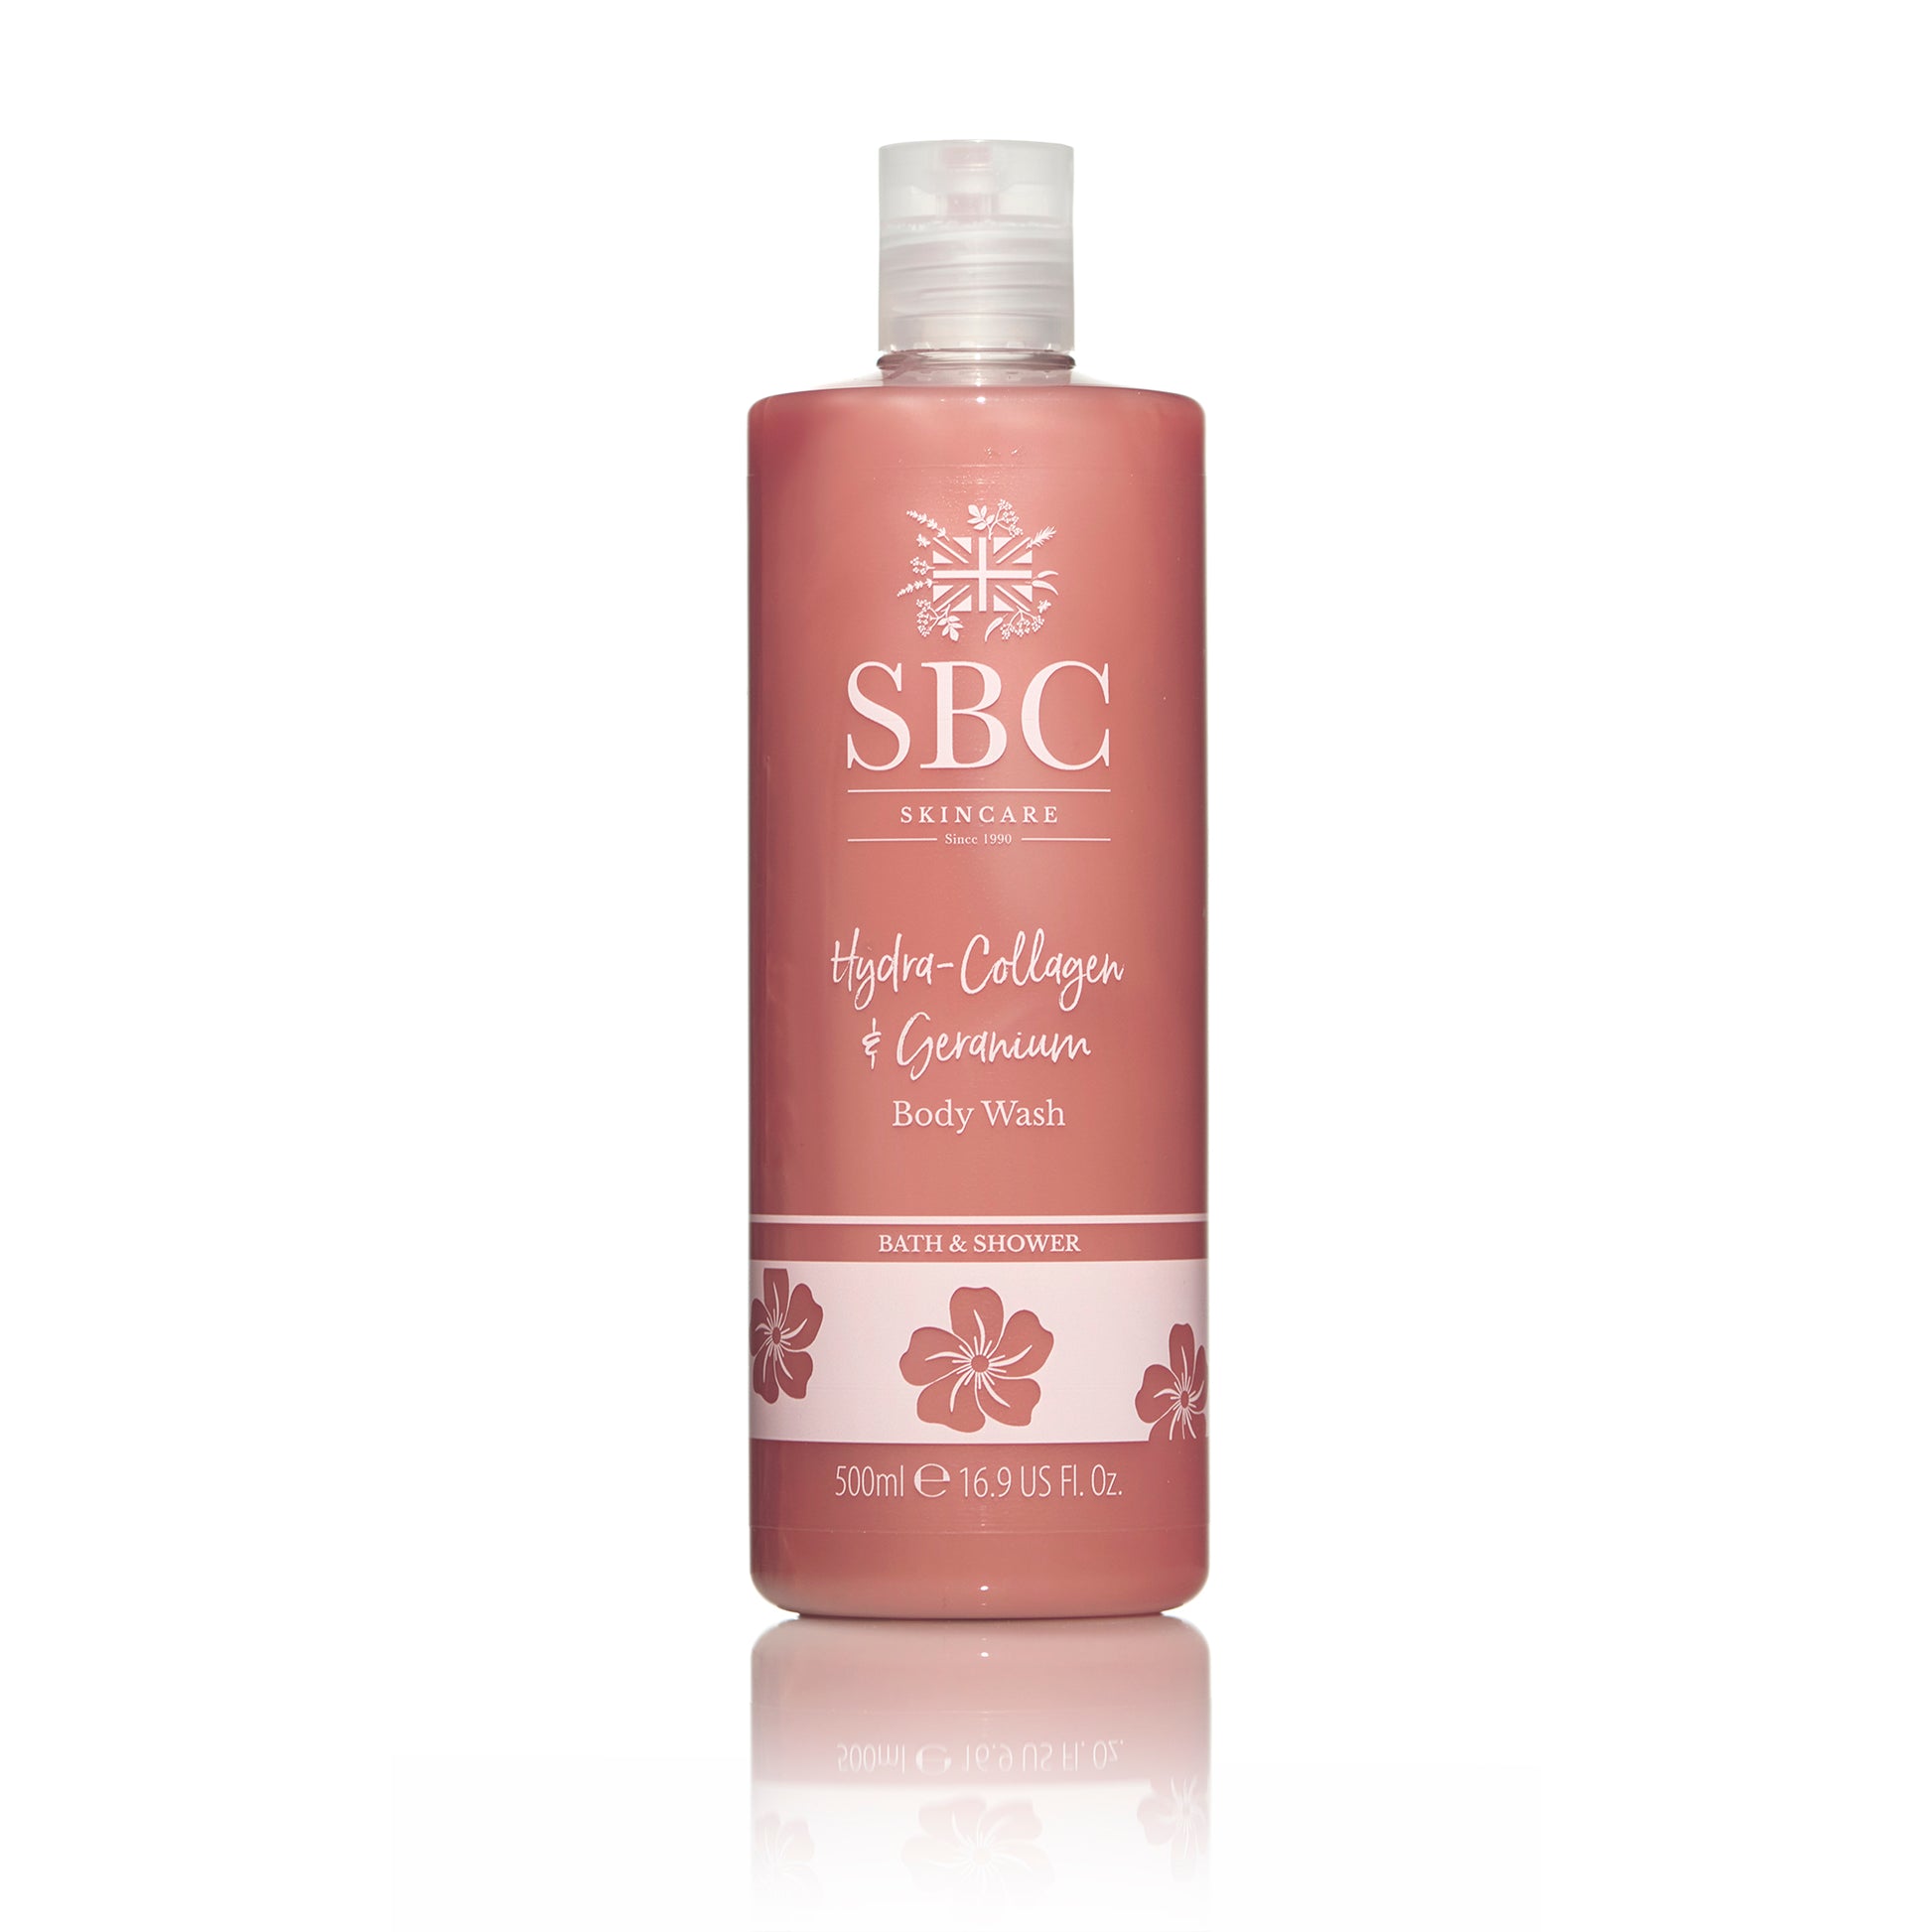 SBC Skincare's Hydra-Collagen & Geranium Body Wash on a white background 